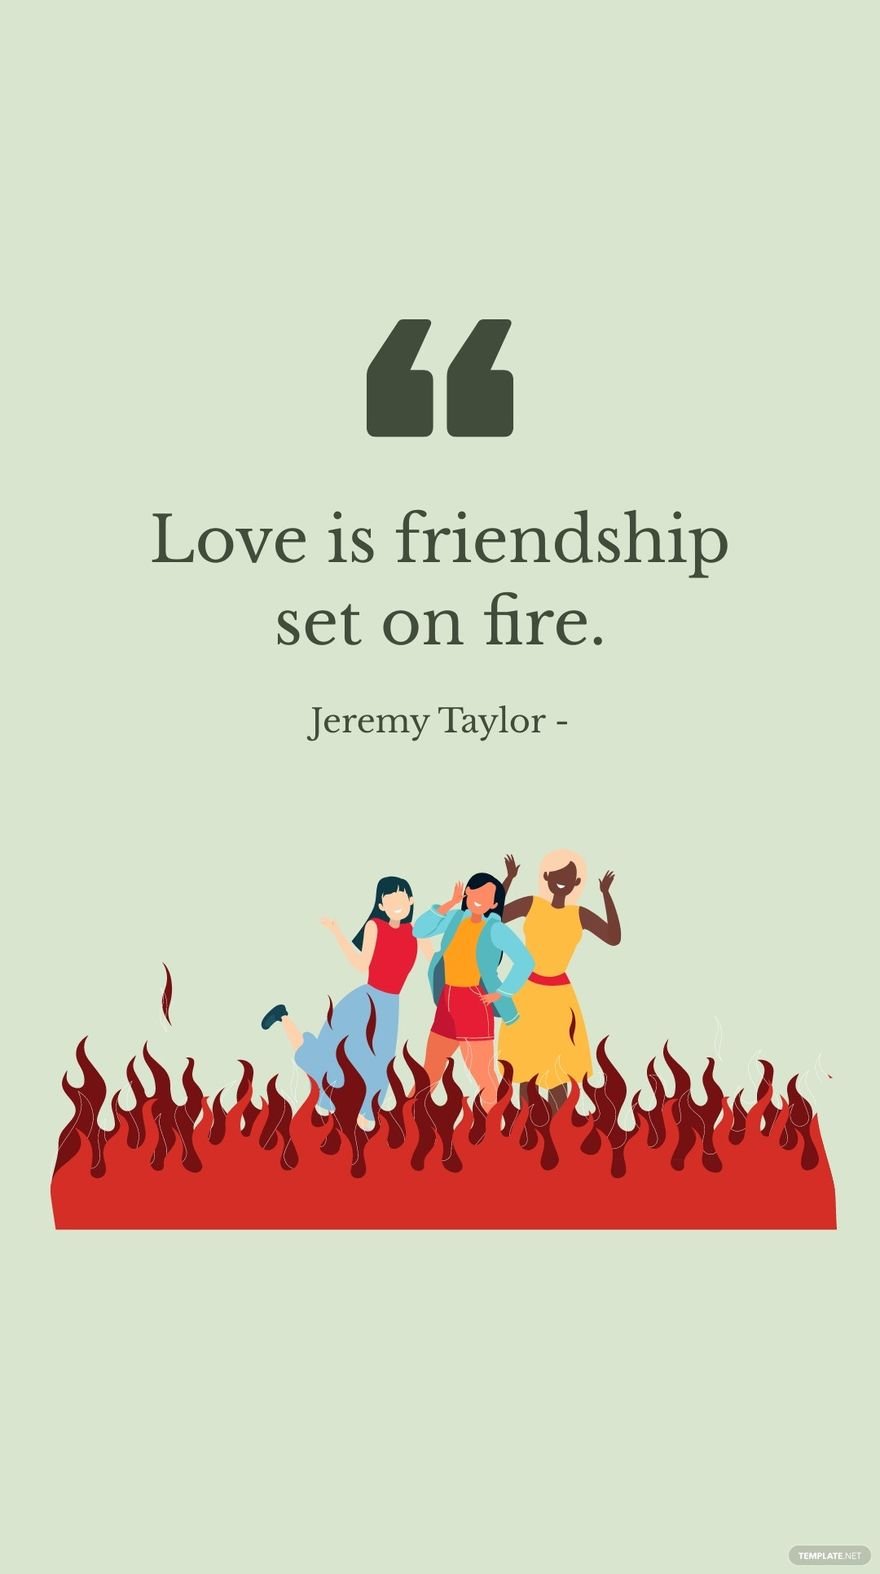 Jeremy Taylor - Love is friendship set on fire.